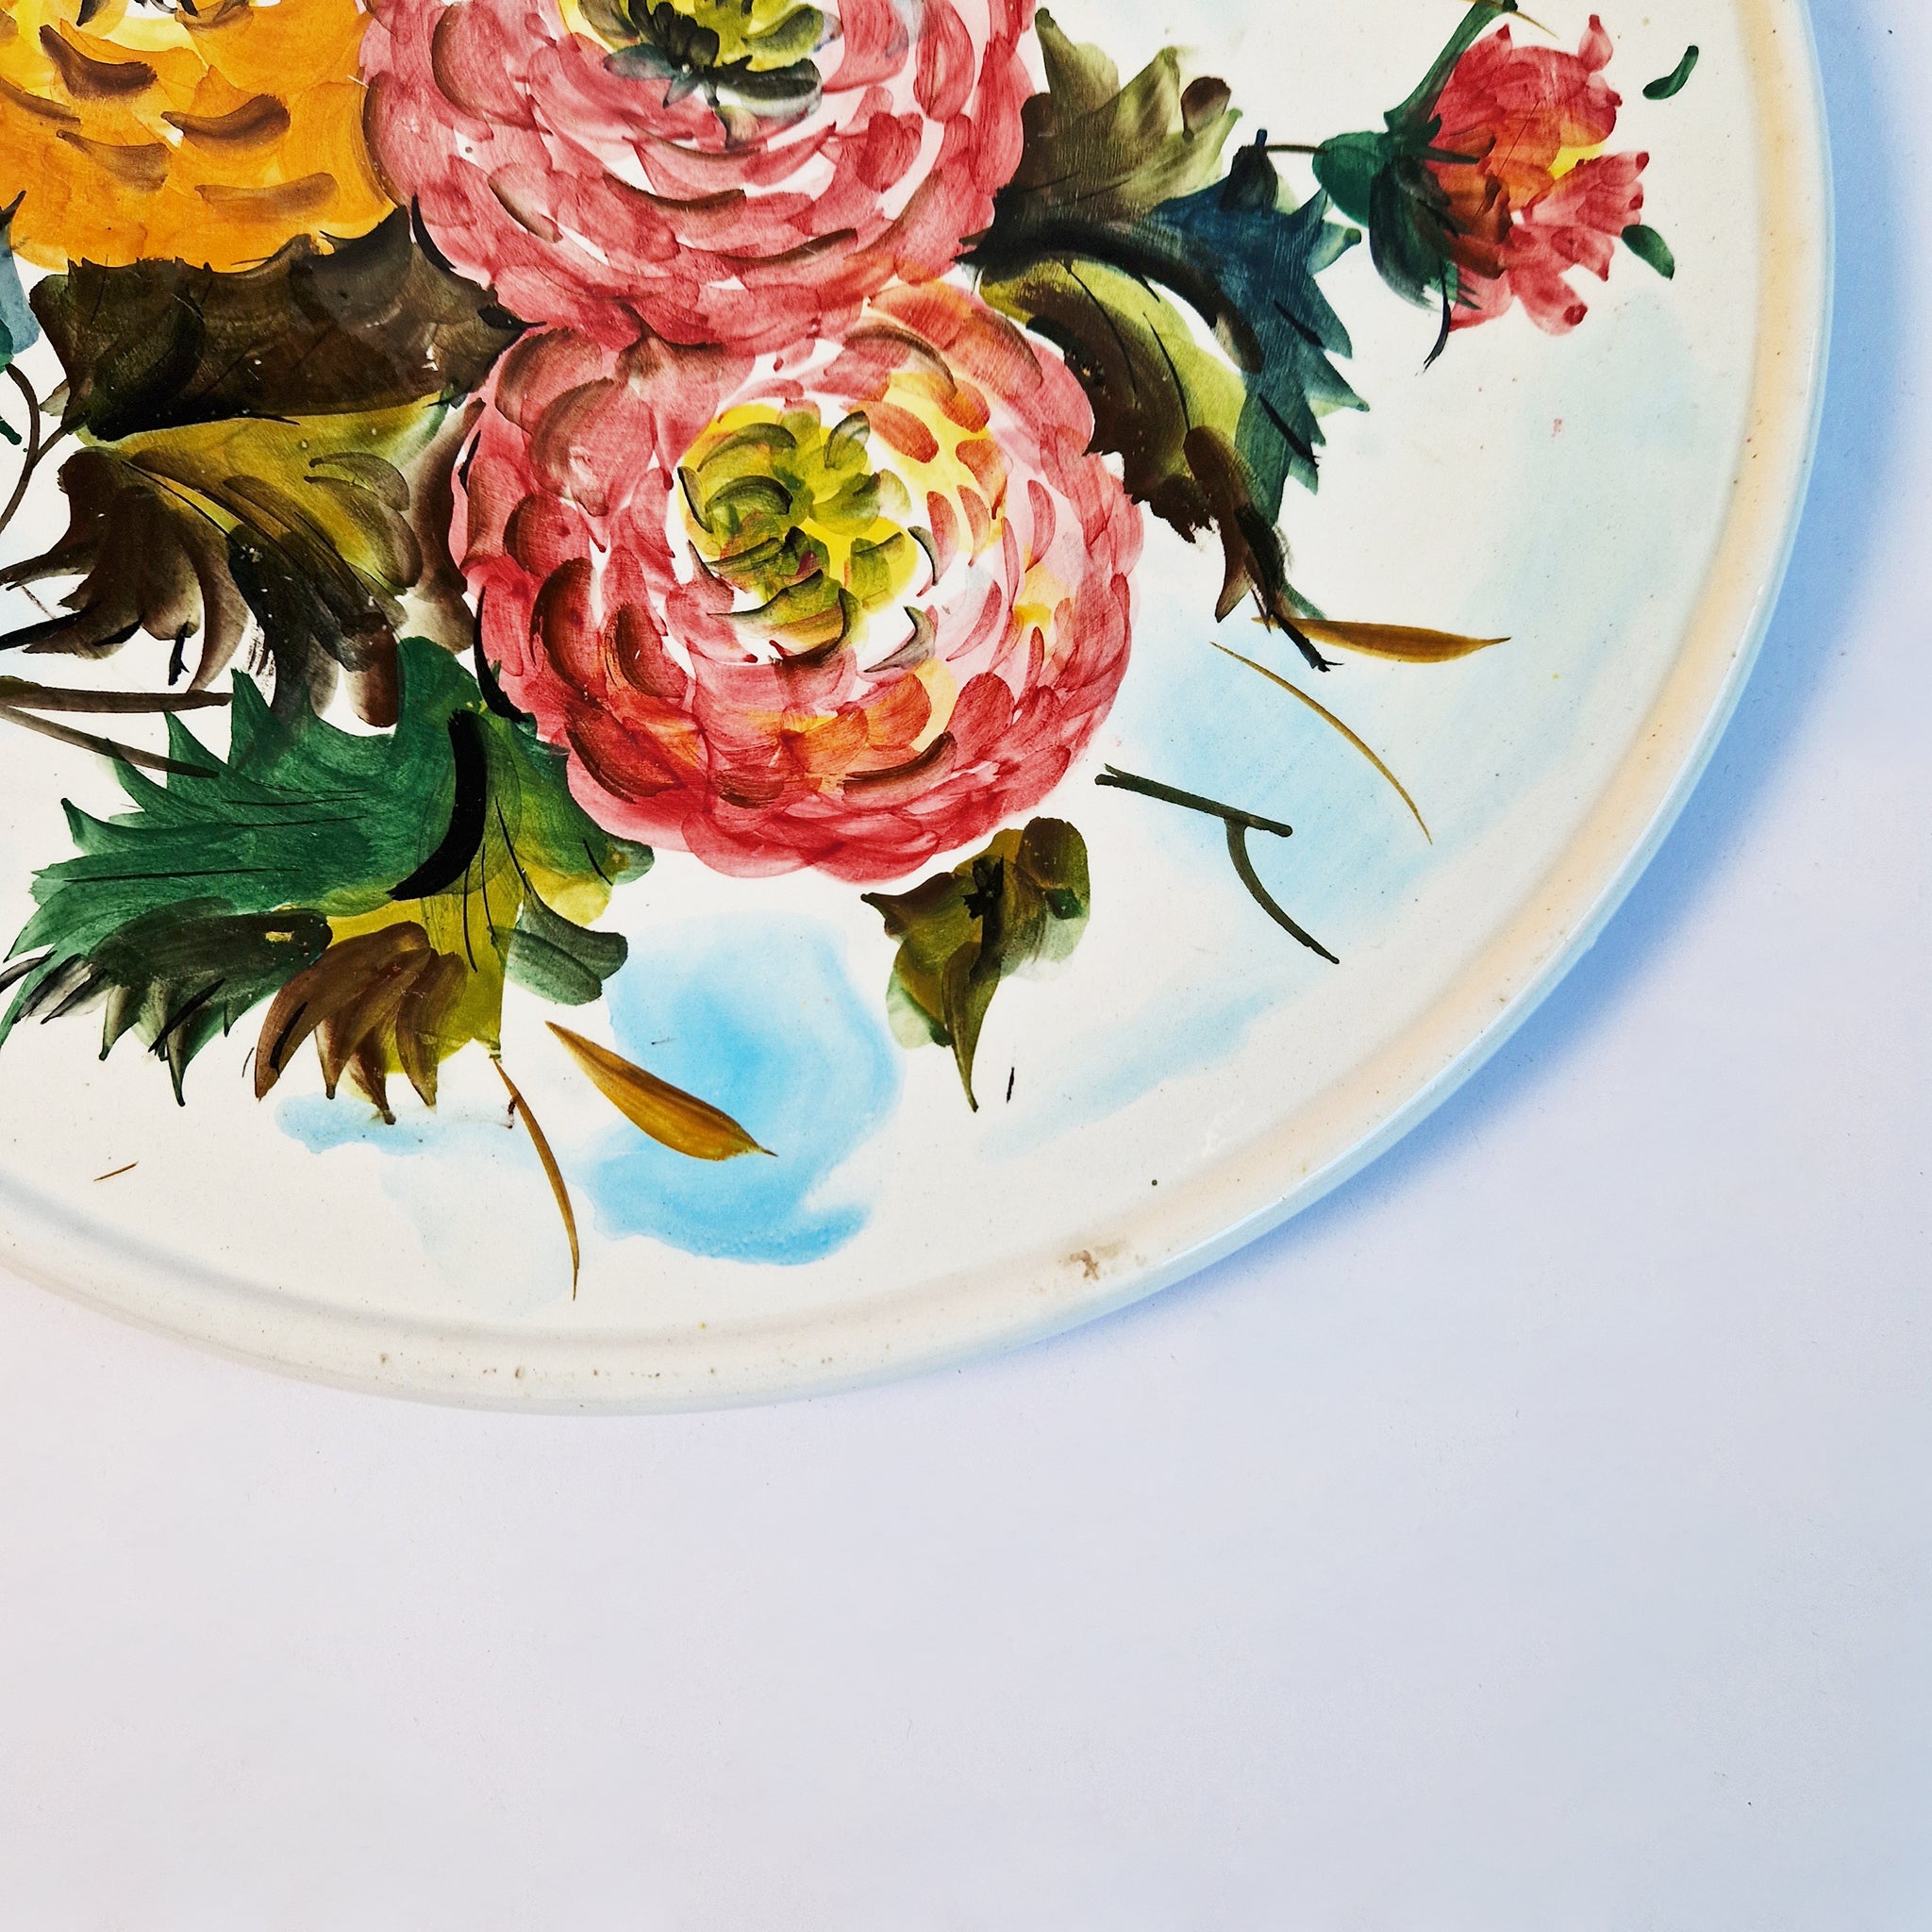 Mid-century Italian ceramic dish with flower motif